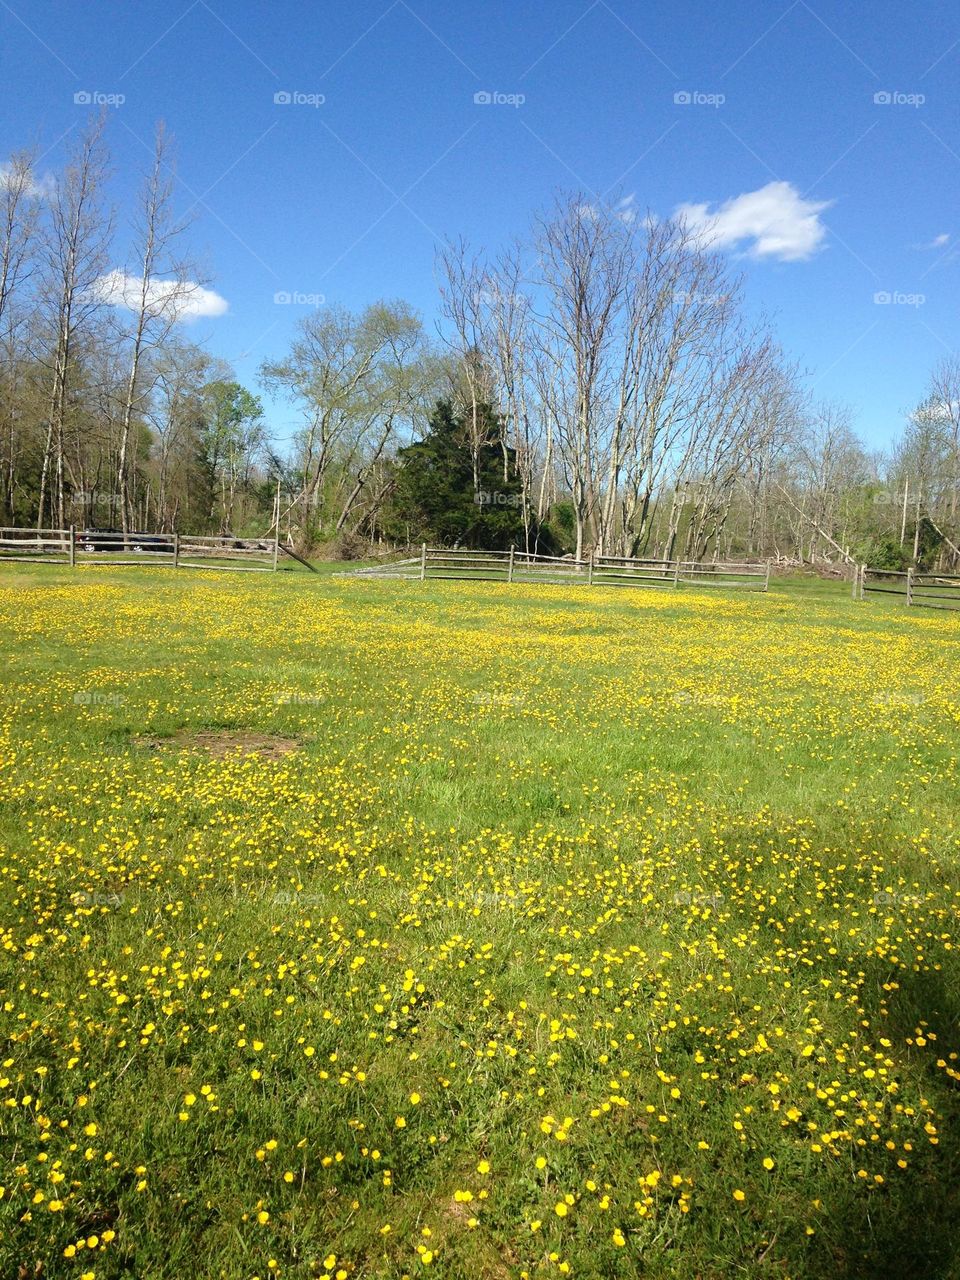 A field of yellow flowers beneath a bright blue sky. Taken in Wall Township NJ. 